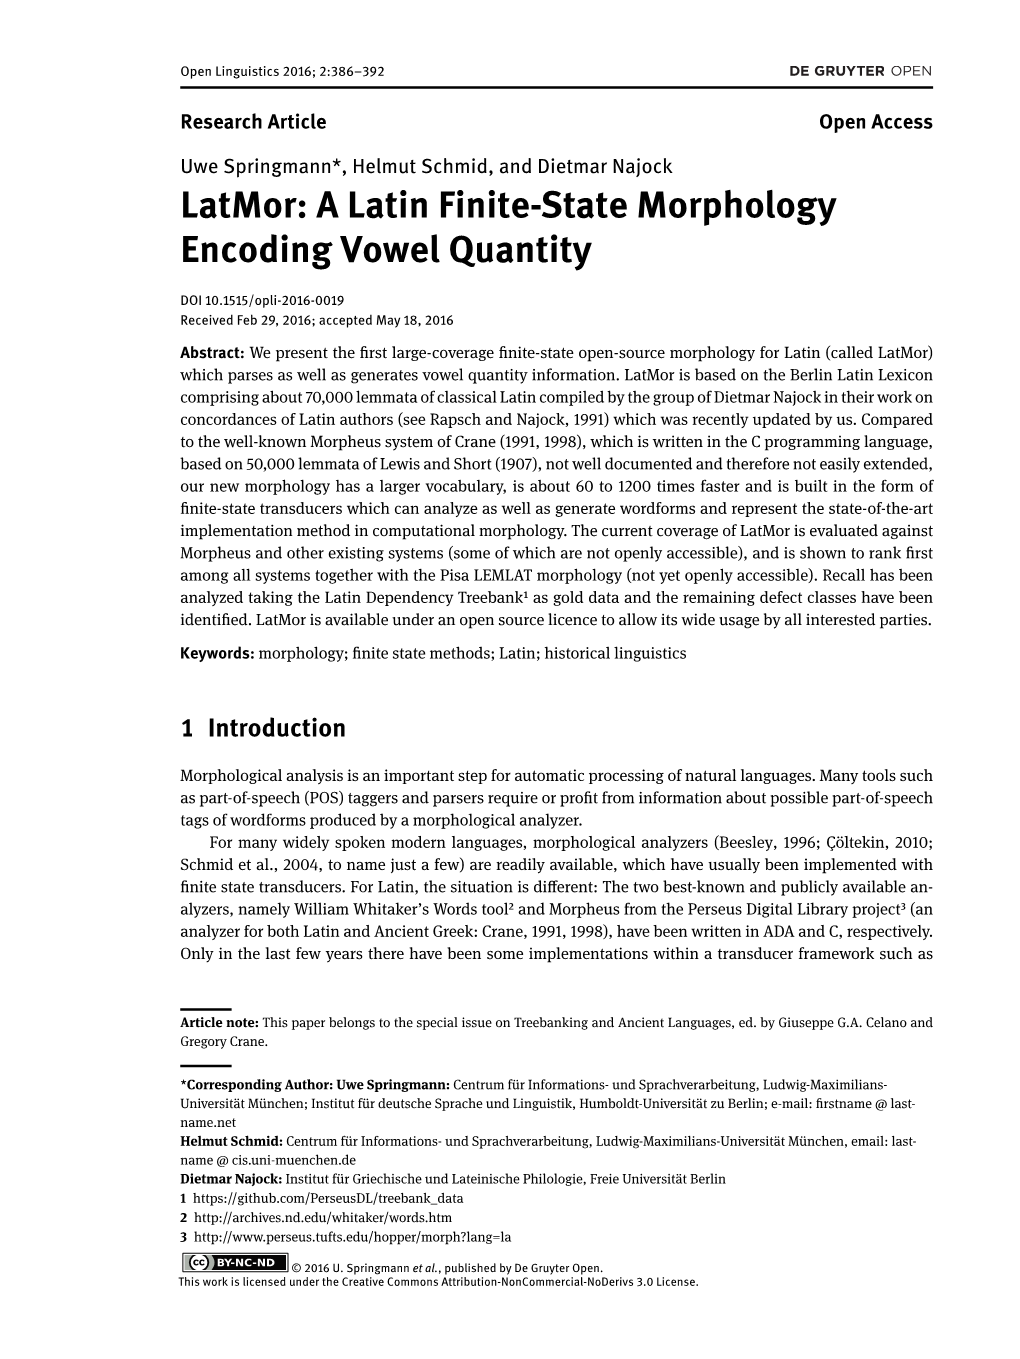 A Latin Finite-State Morphology Encoding Vowel Quantity